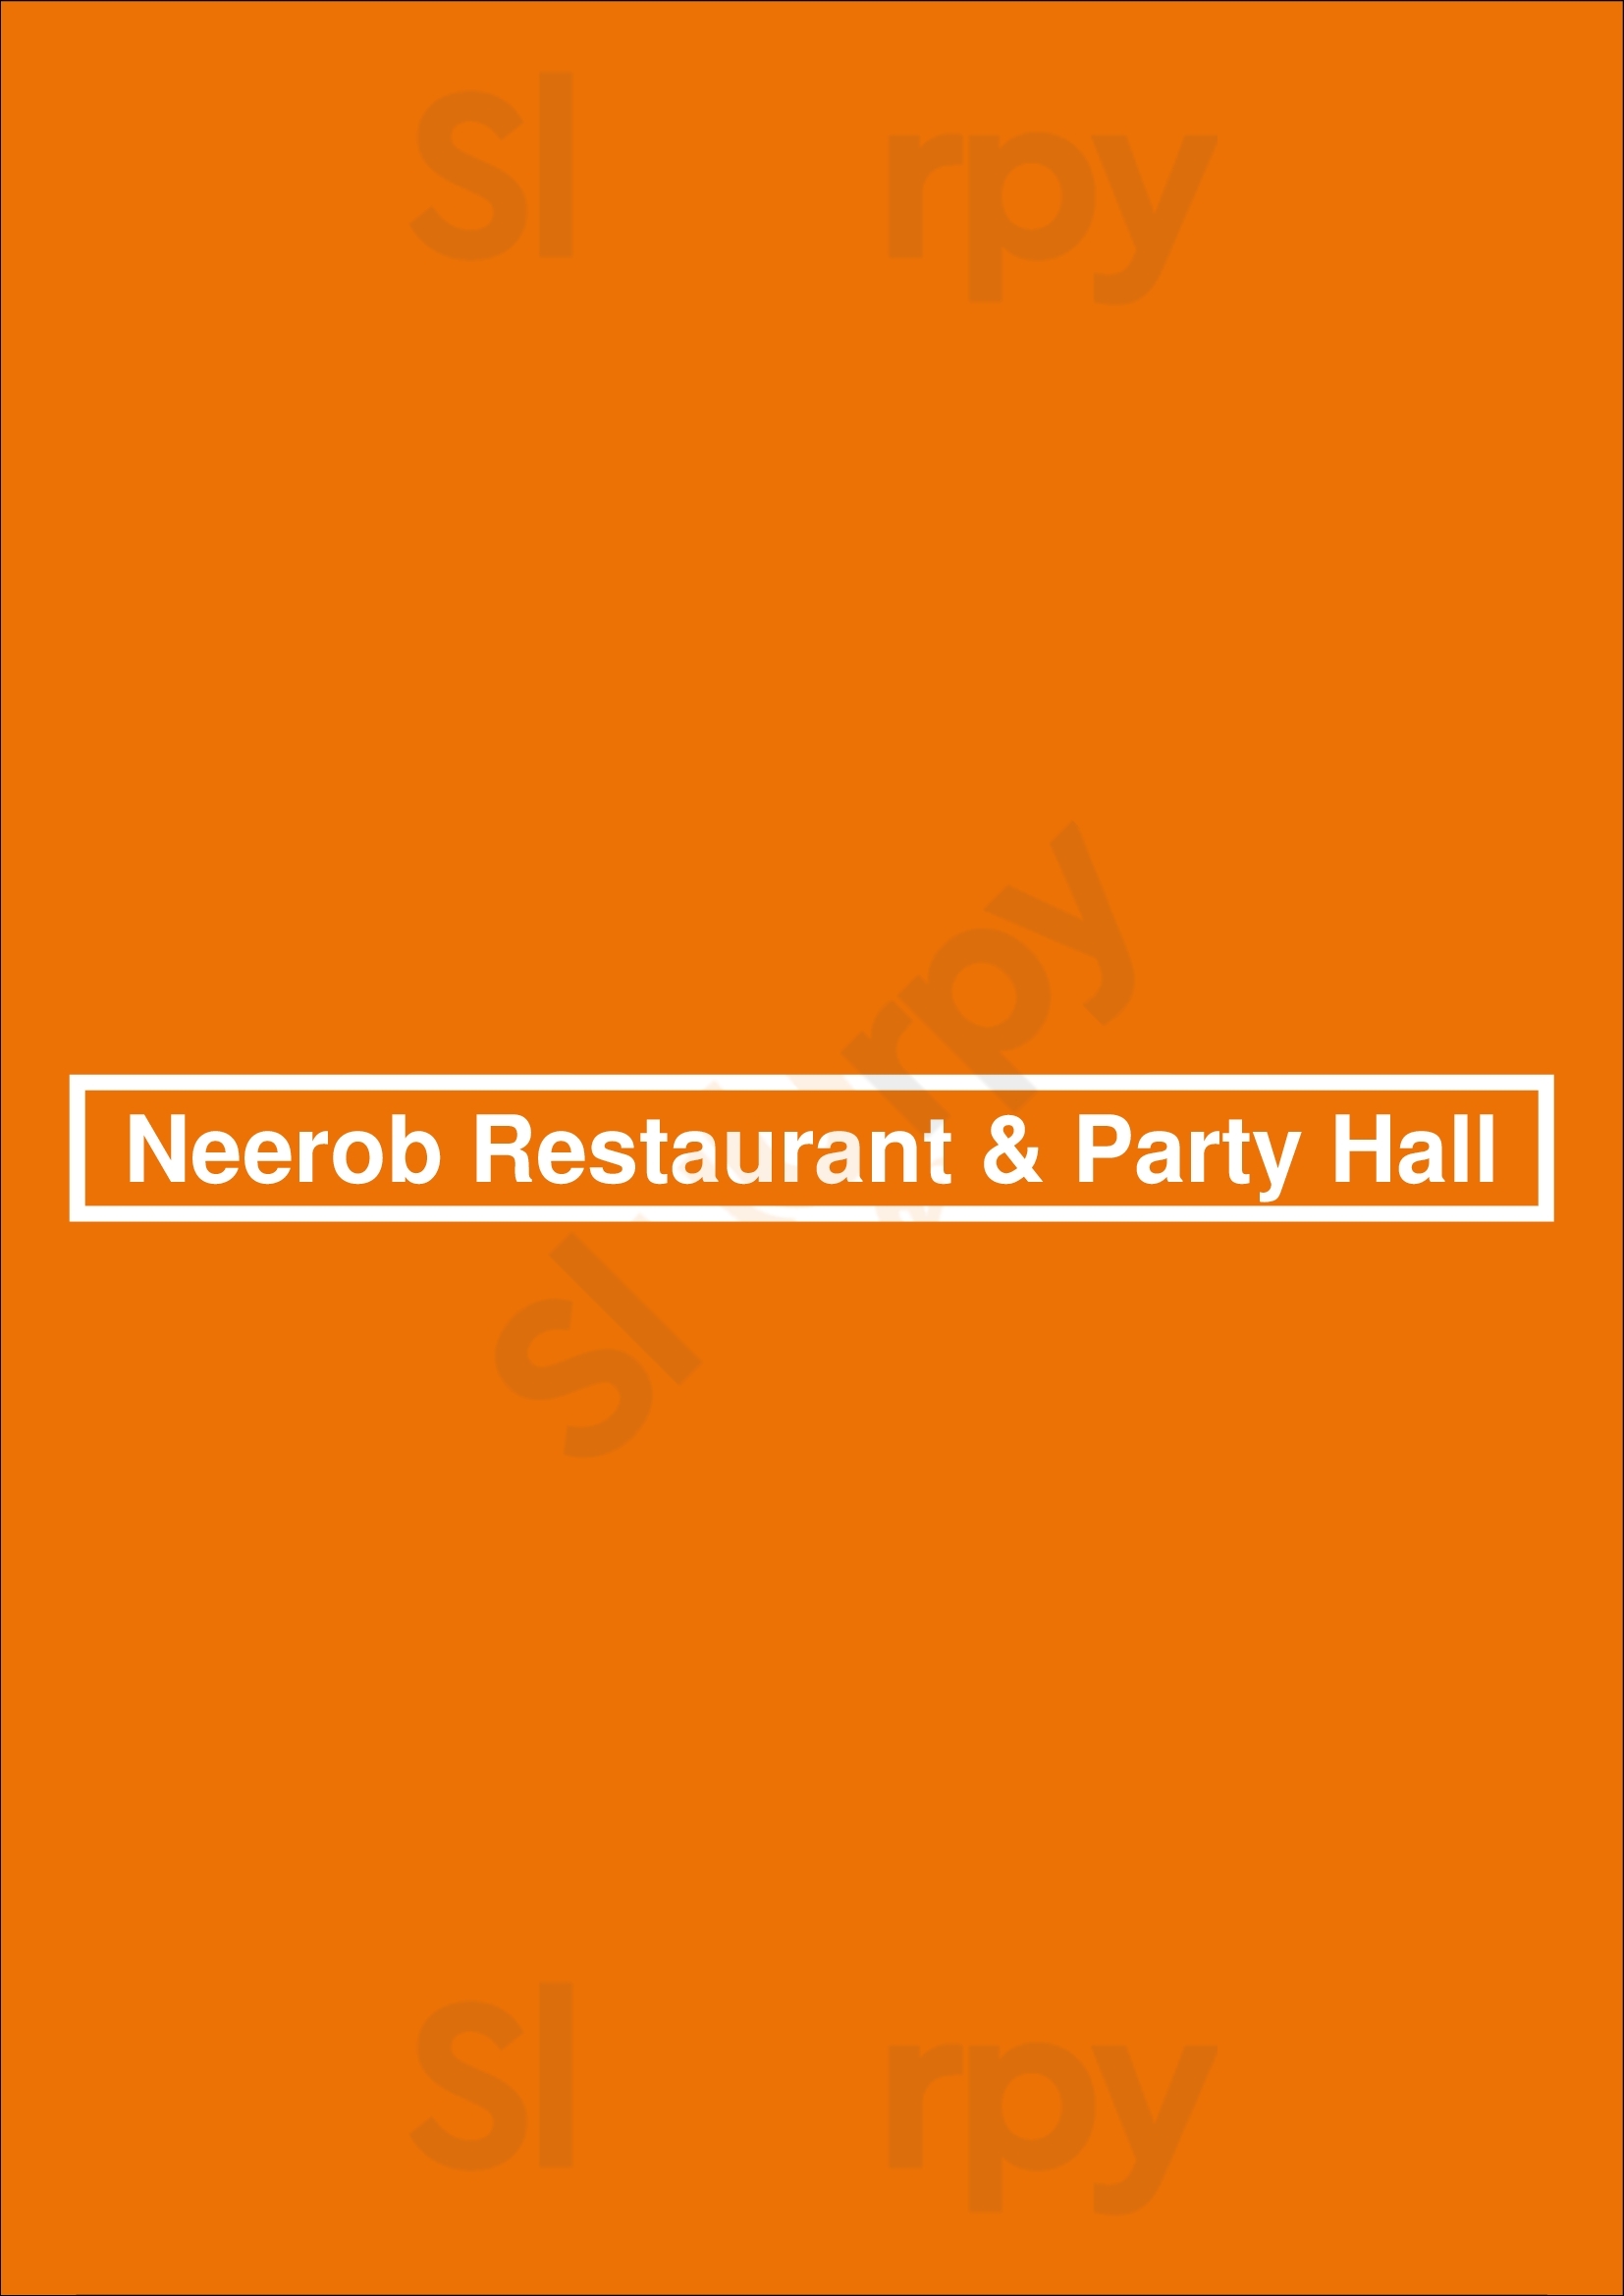 Neerob Restaurant & Party Hall New York City Menu - 1